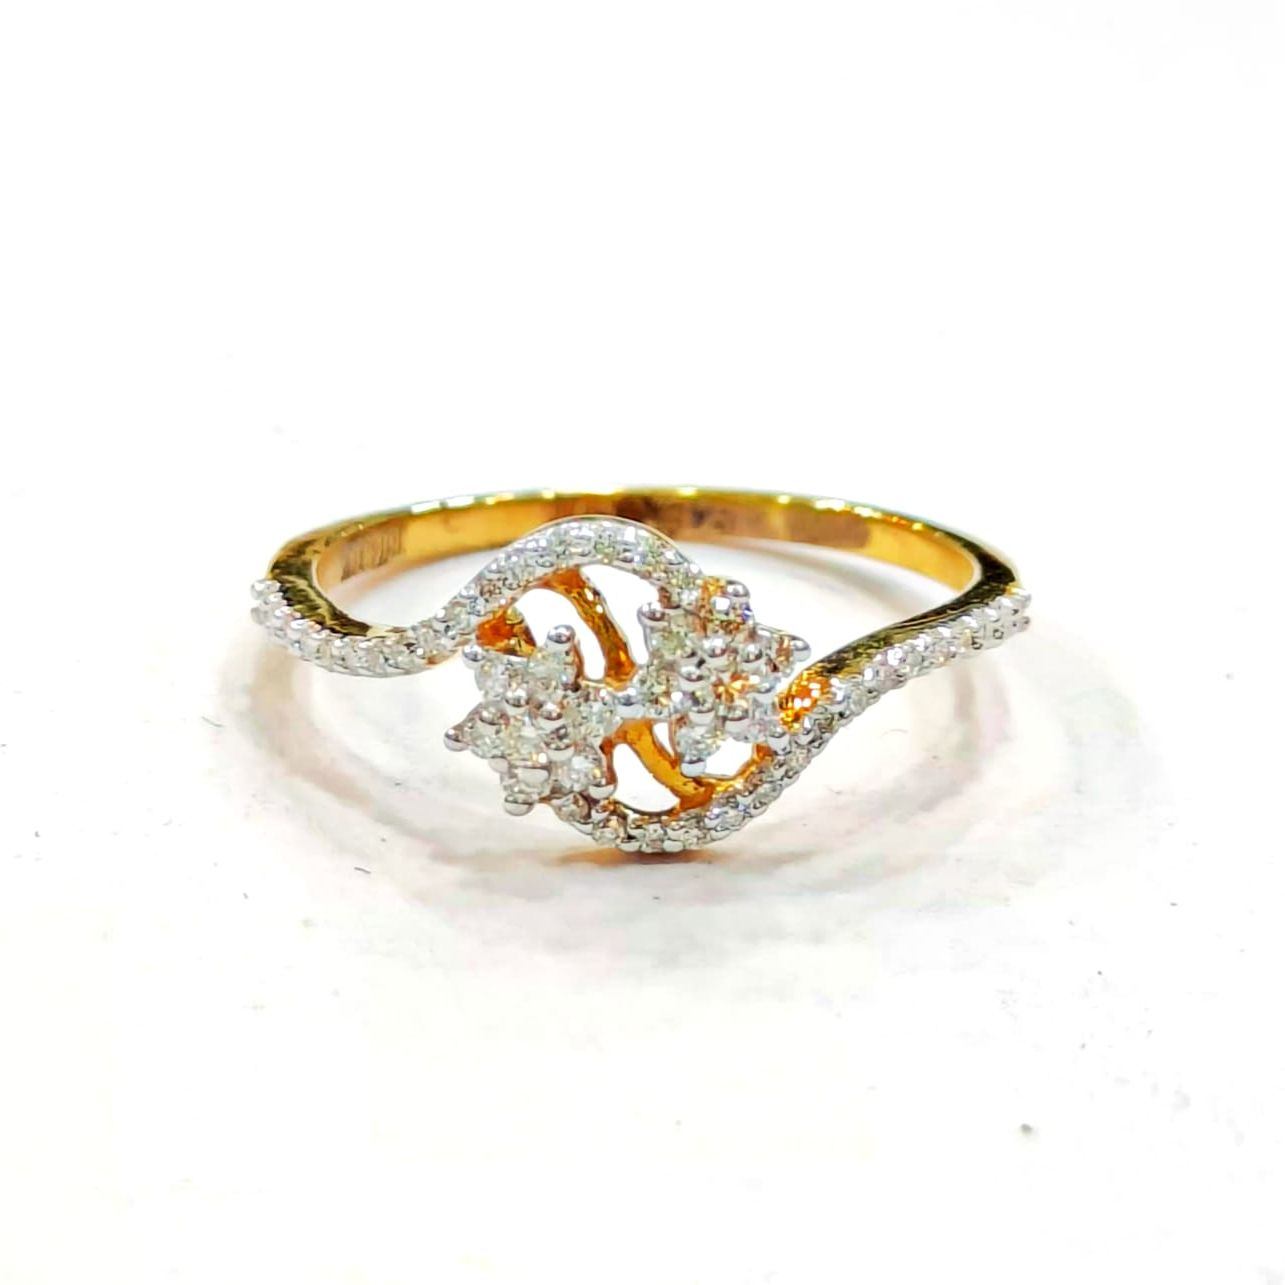 Buy 14Kt Diamond Simple Ladies Ring 483VA972 Online from Vaibhav Jewellers